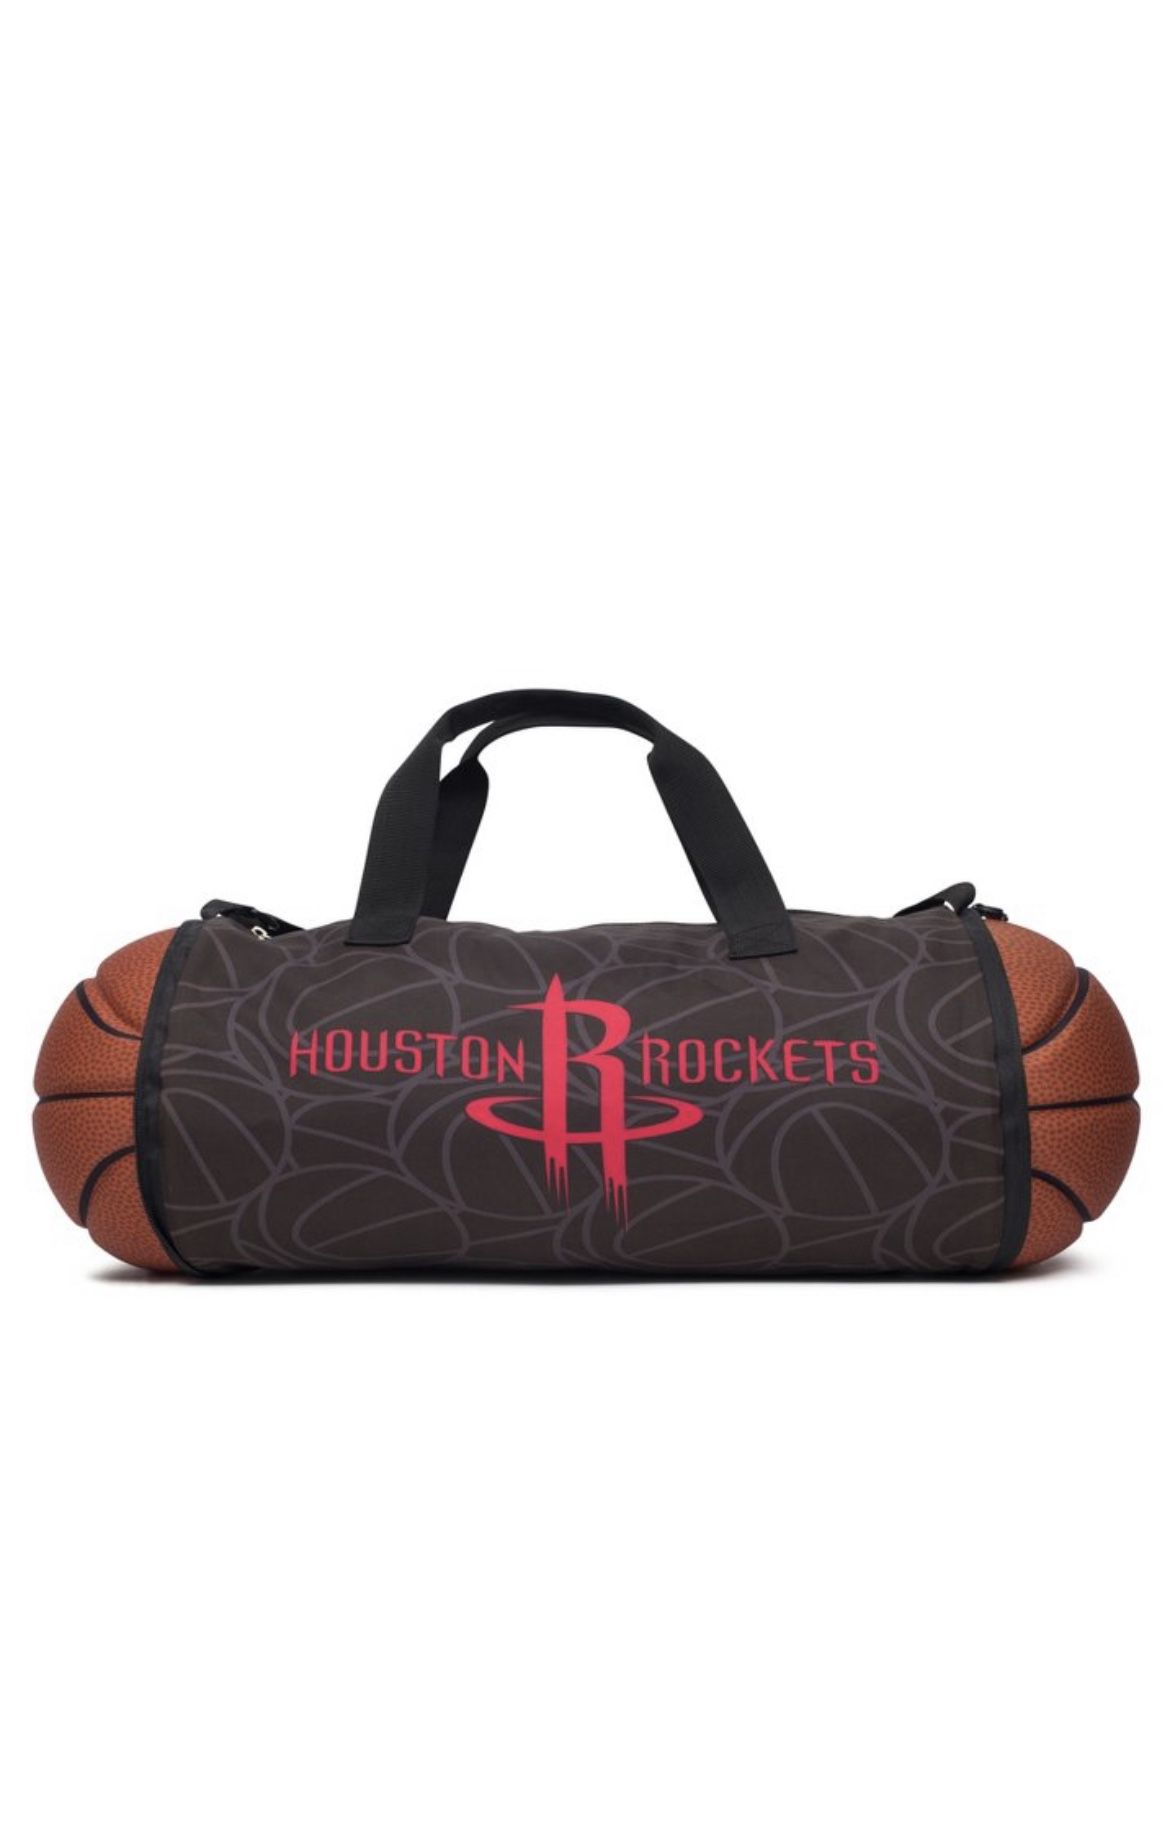 NBA Houston Rockets Collapsible Basketball Duffel Bag